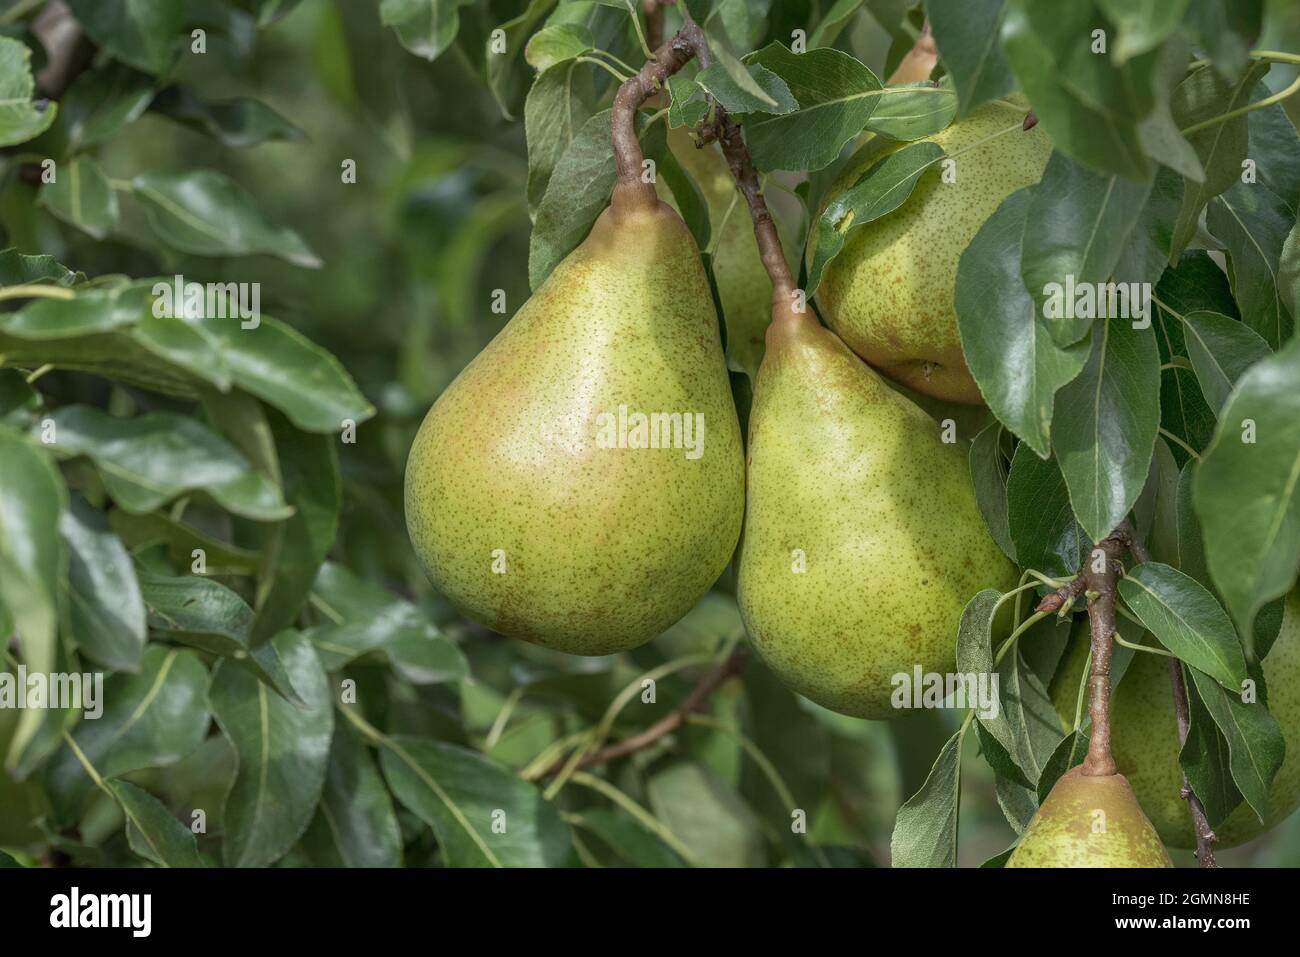 Common pear (Pyrus communis 'Hochfeine Butterbirne', Pyrus communis Hochfeine Butterbirne), pear on a tree, cultivar Hochfeine Butterbirne Stock Photo